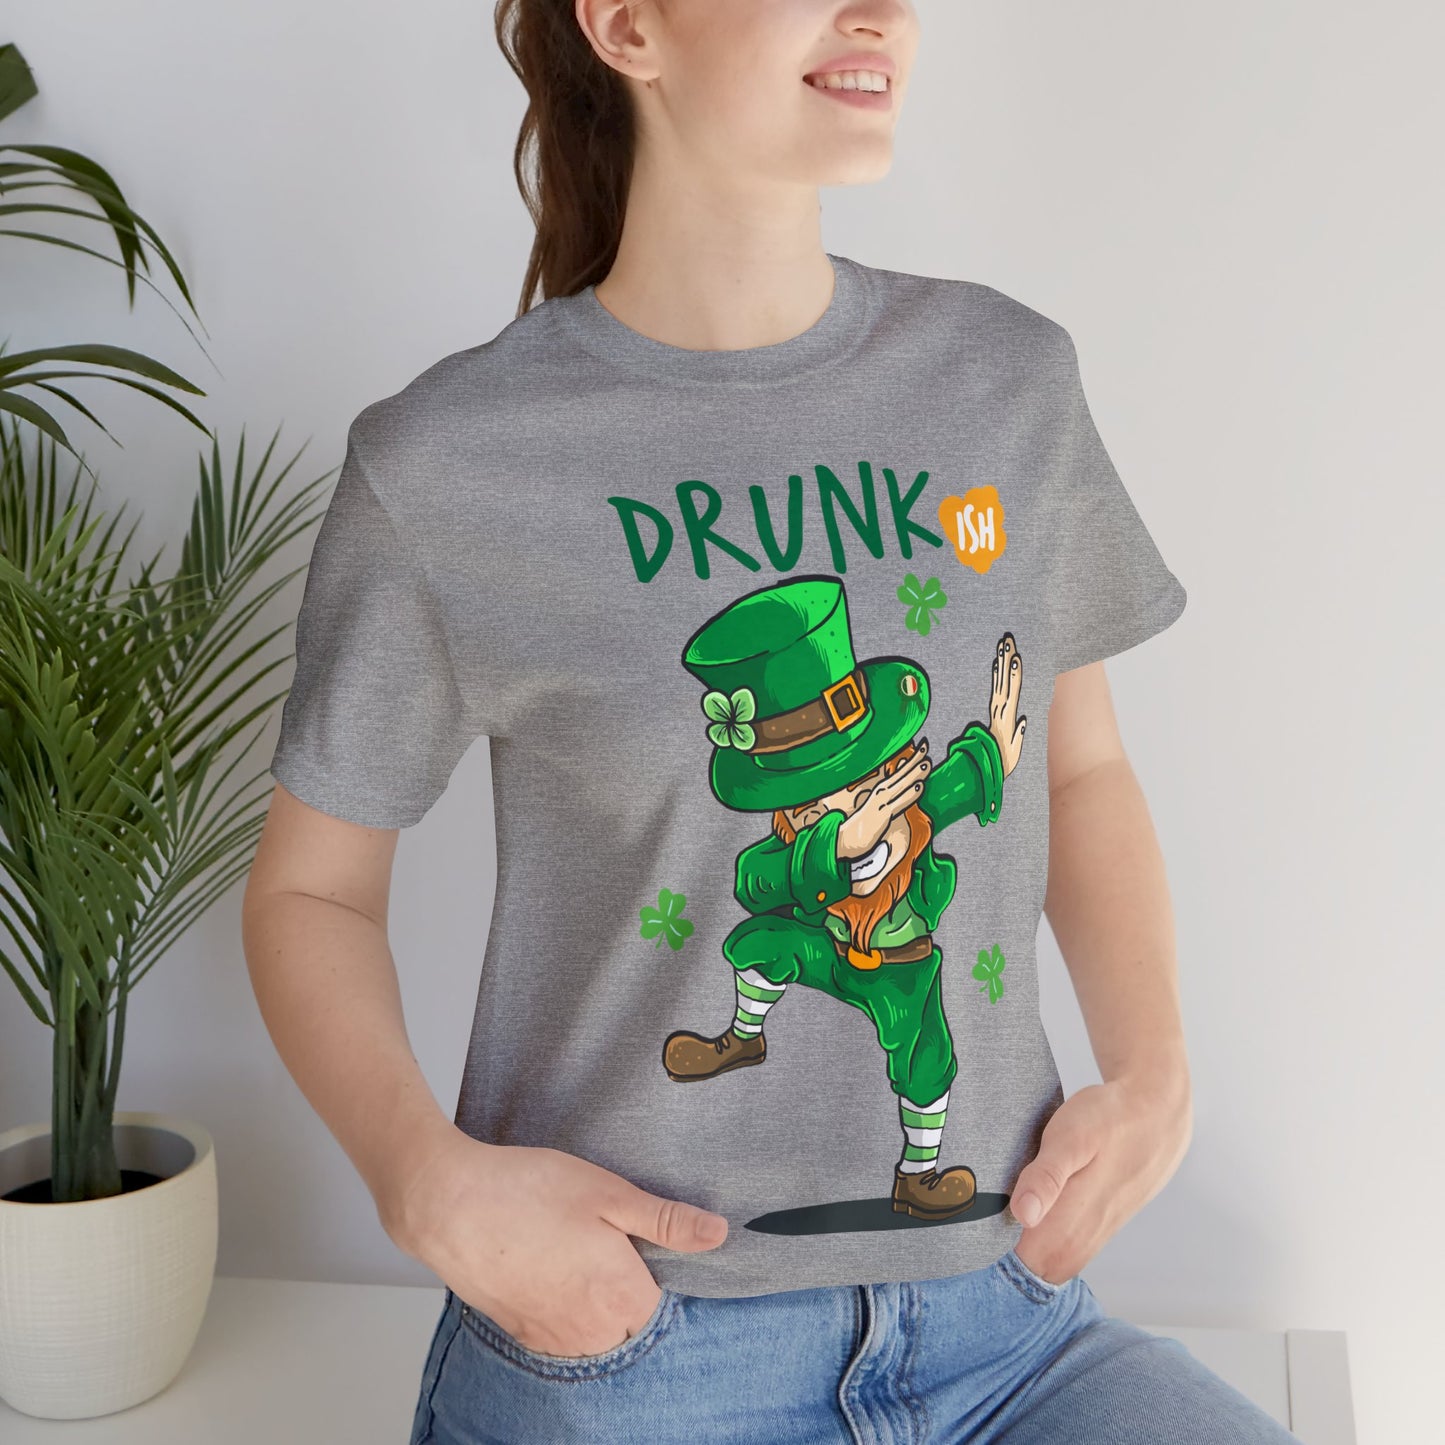 Drunk ish St Patricks day Shirt Day drinking shirt